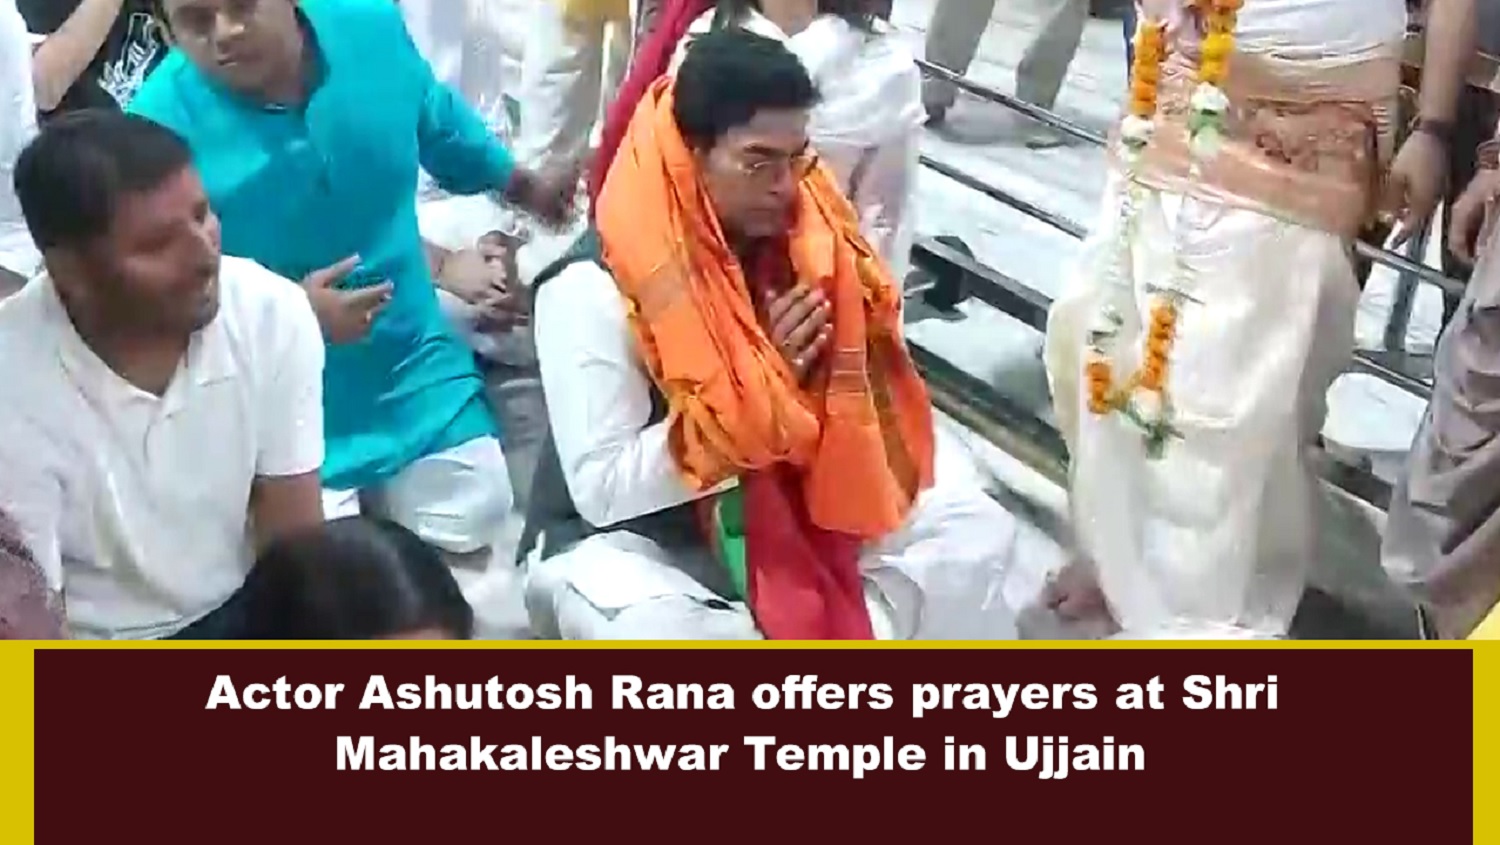 Actor Ashutosh Rana offers prayers at Shri Mahakaleshwar Temple in Ujjain